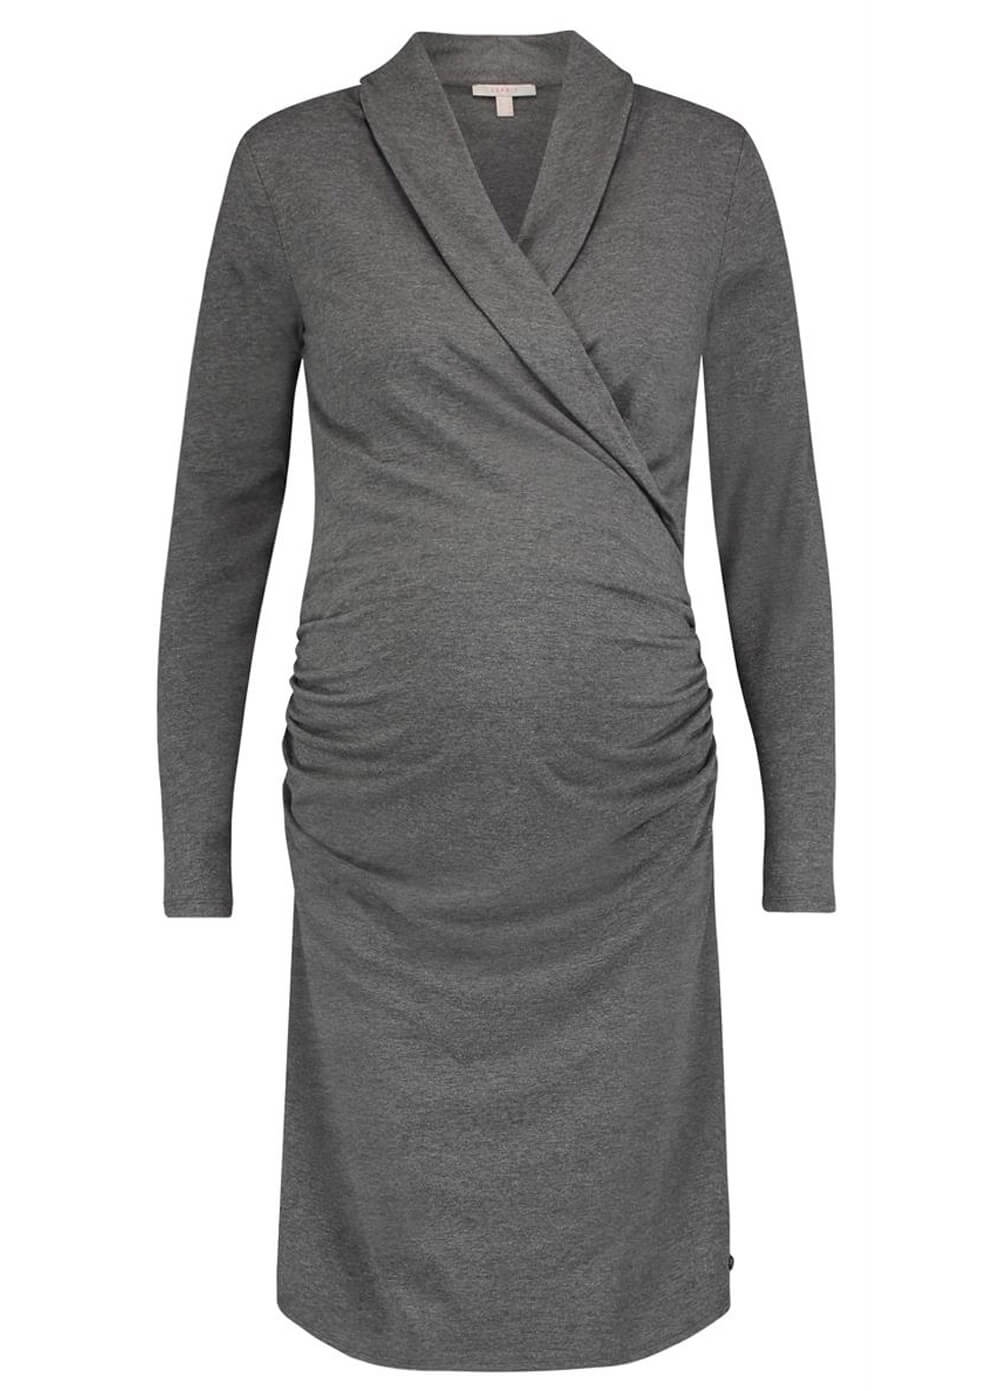 Surplice Maternity & Nursing Dress by Esprit